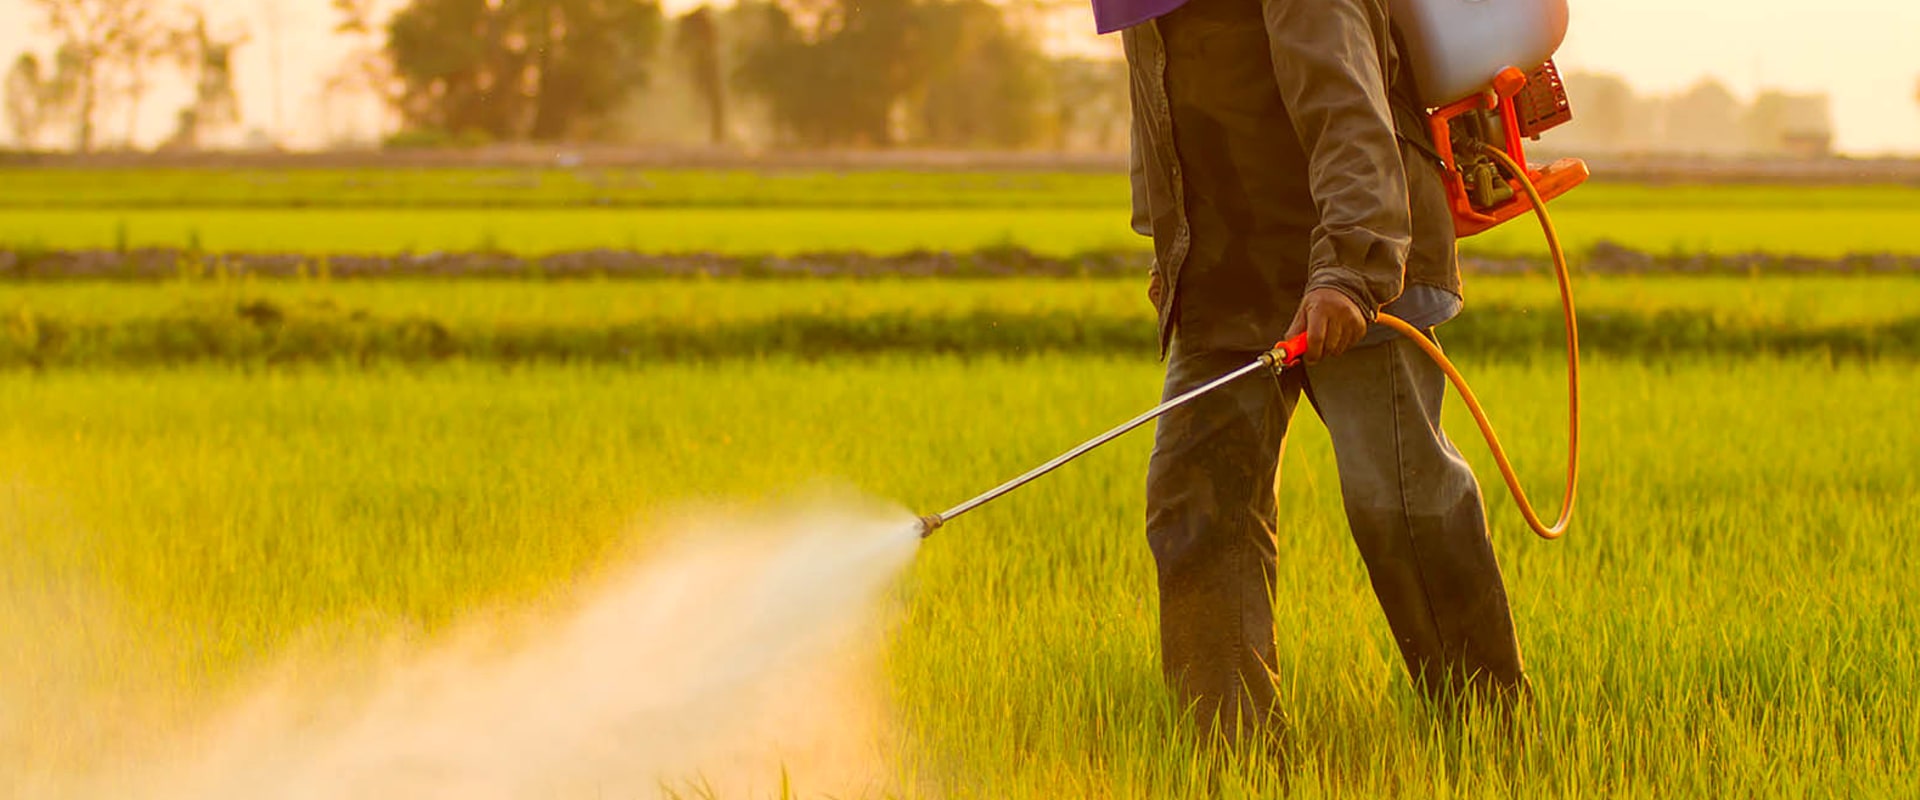 Do lawn pesticides cause cancer?